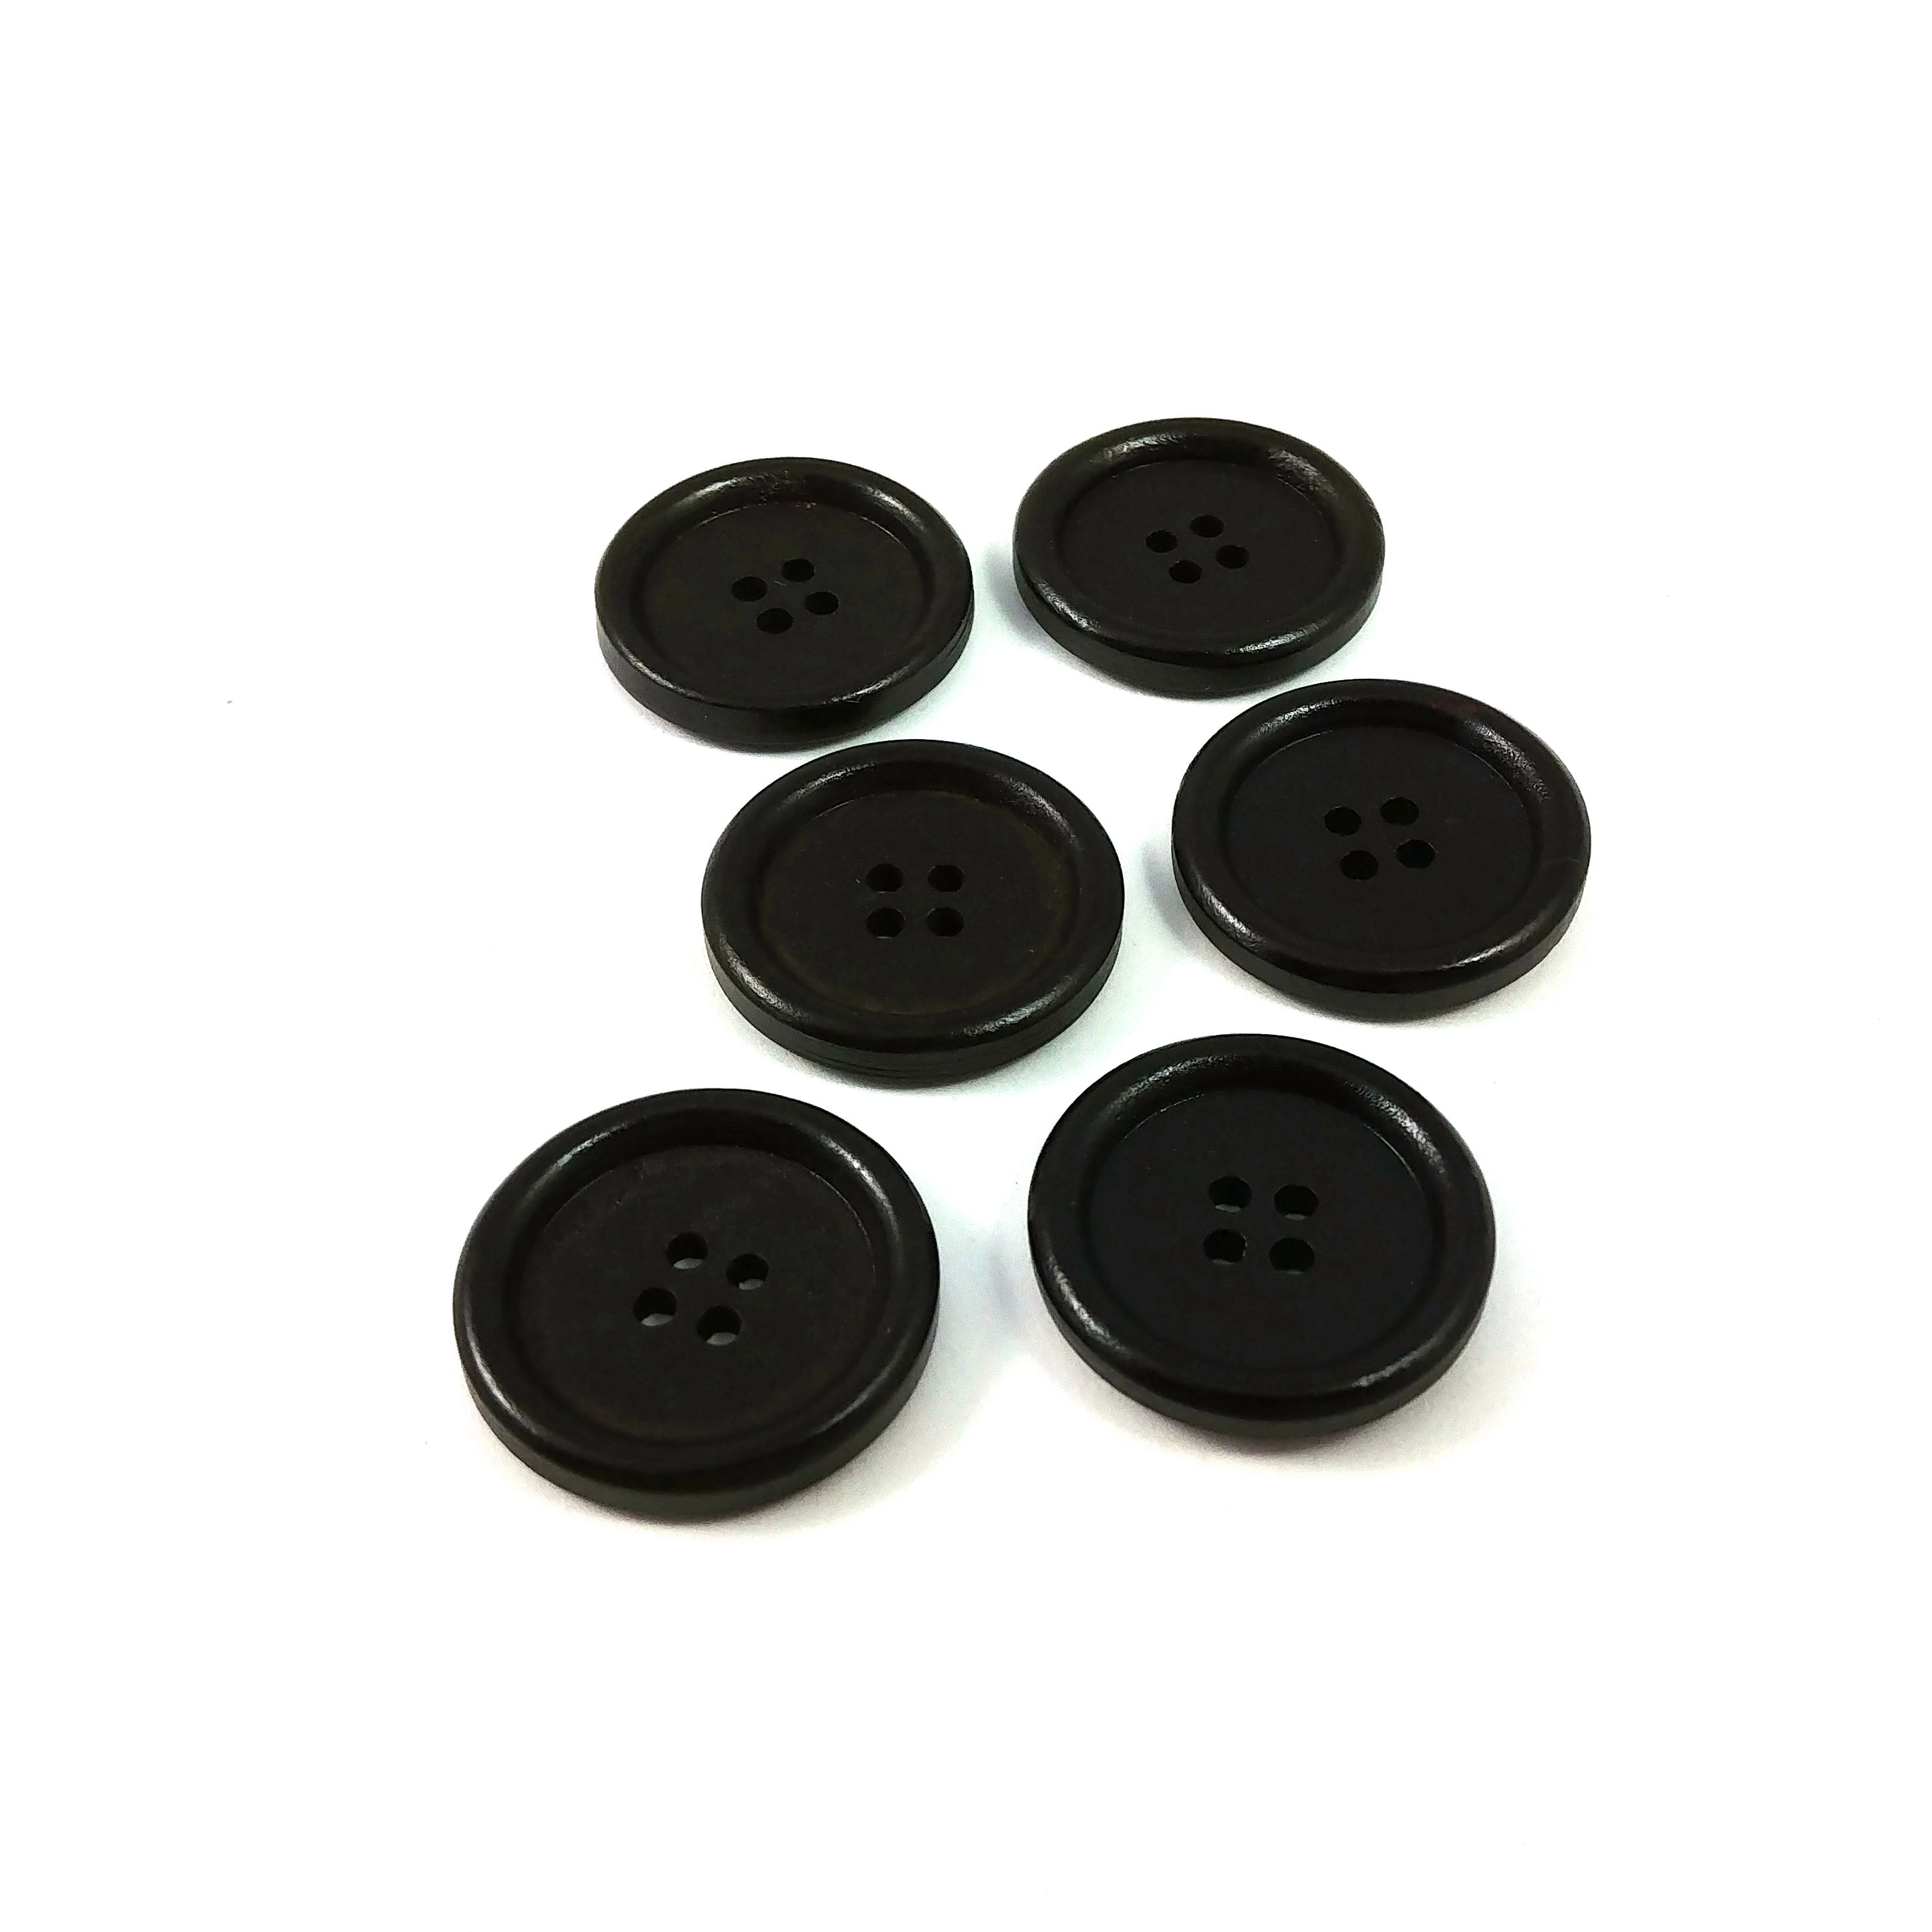 Dark brown Wooden Craft Buttons 25mm - set of 6 wood buttons